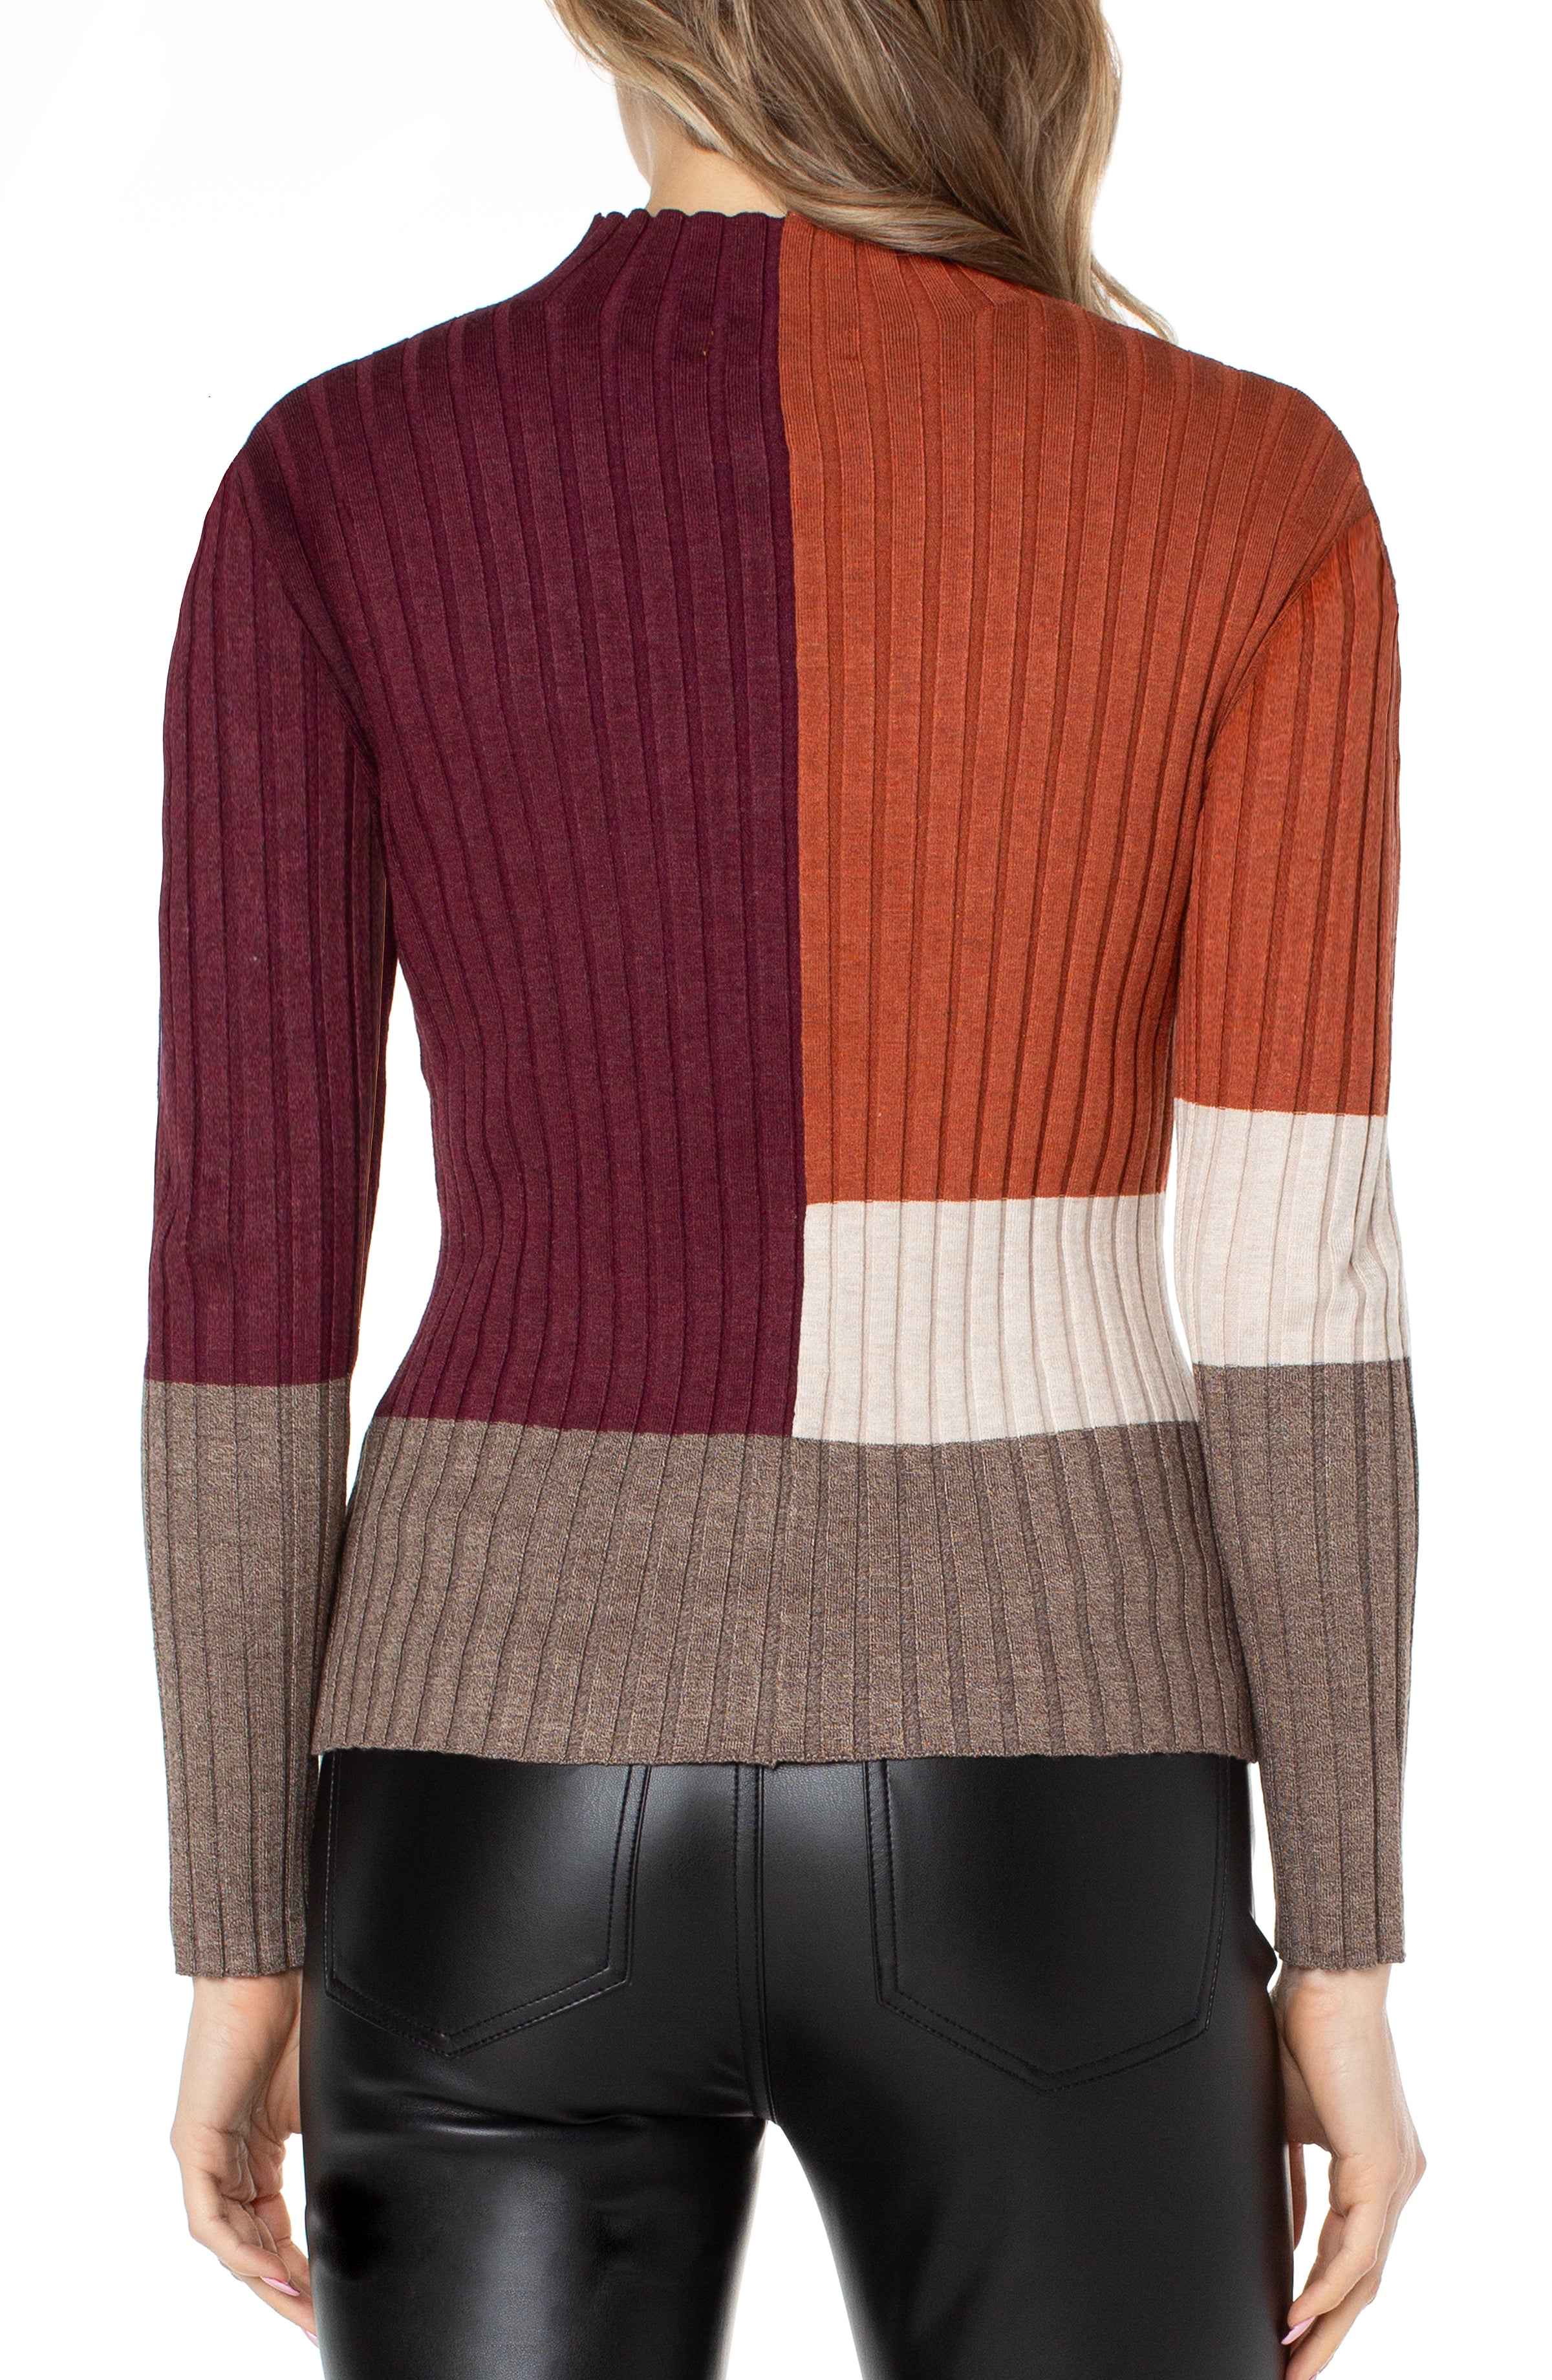 Mock Neck Pullover Sweater - Burgundy/Rust Colorblock